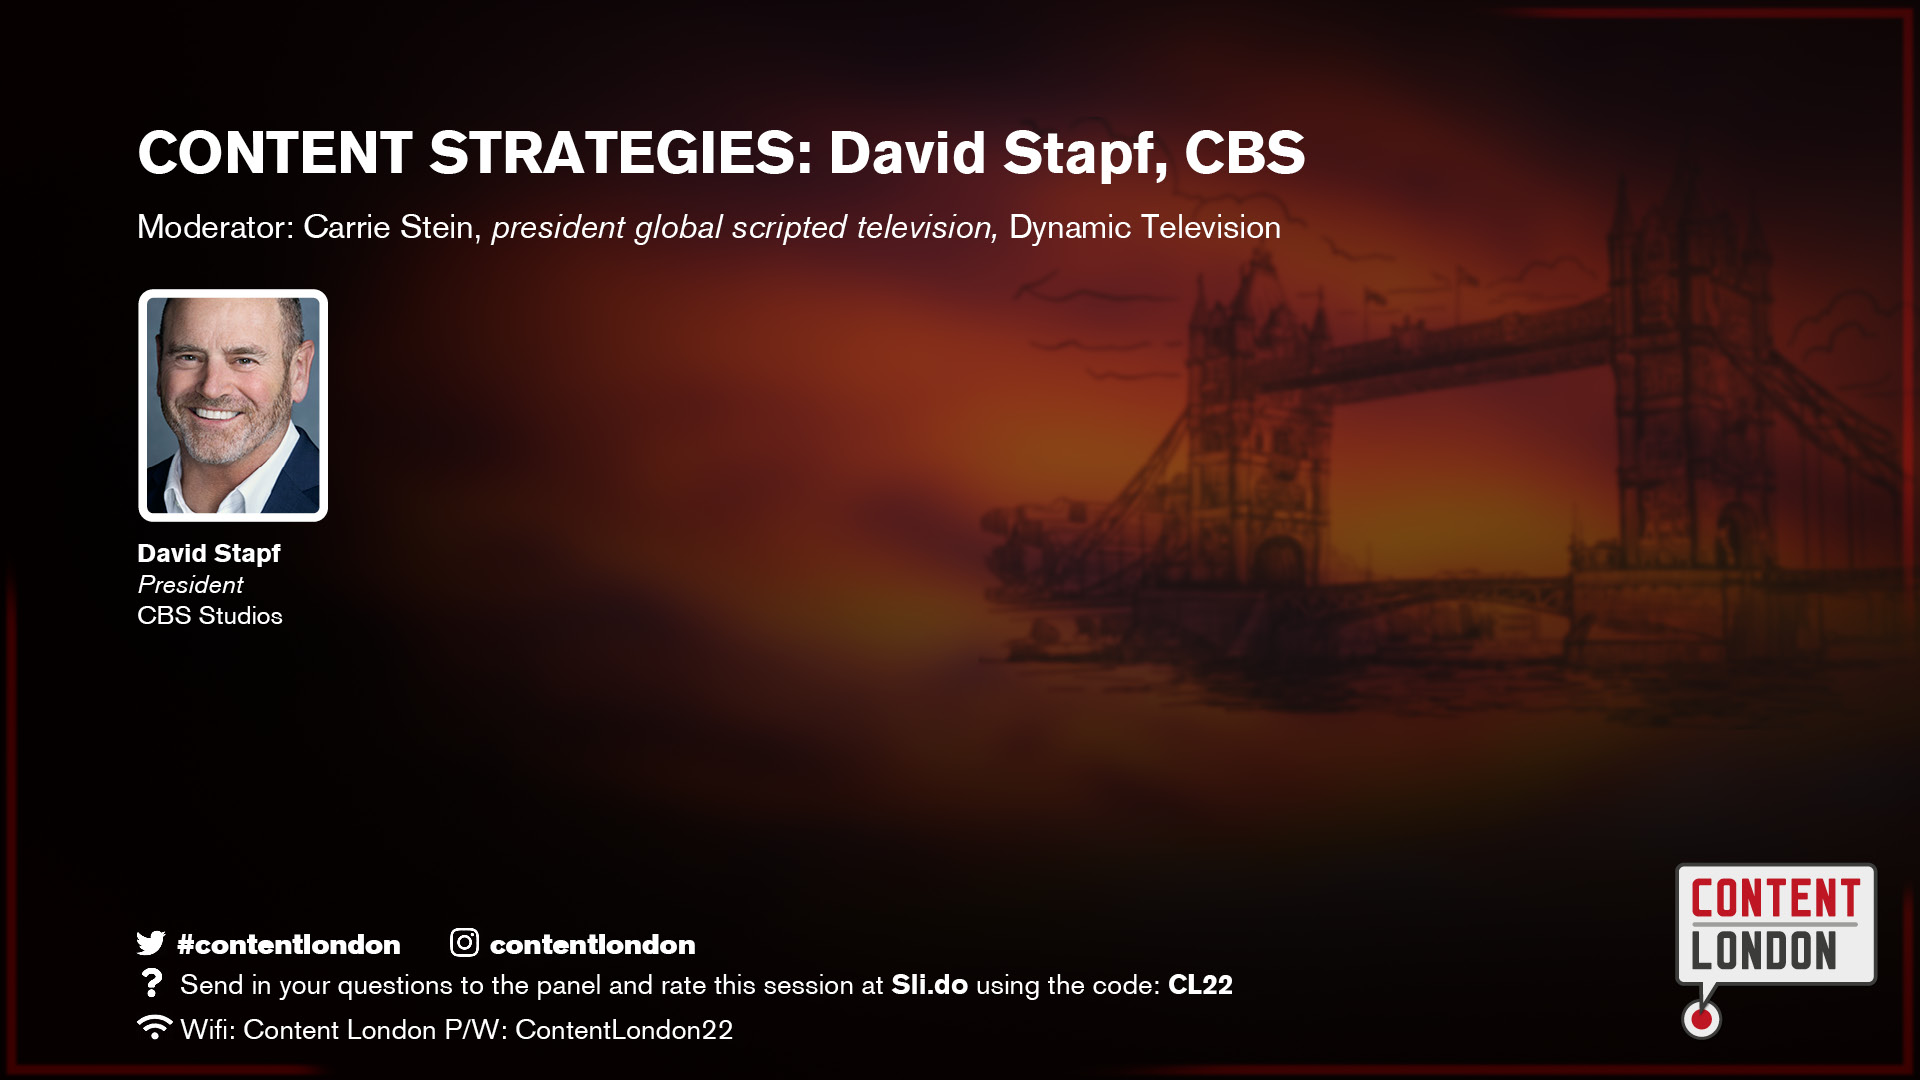 CONTENT STRATEGIES: David Stapf, CBS